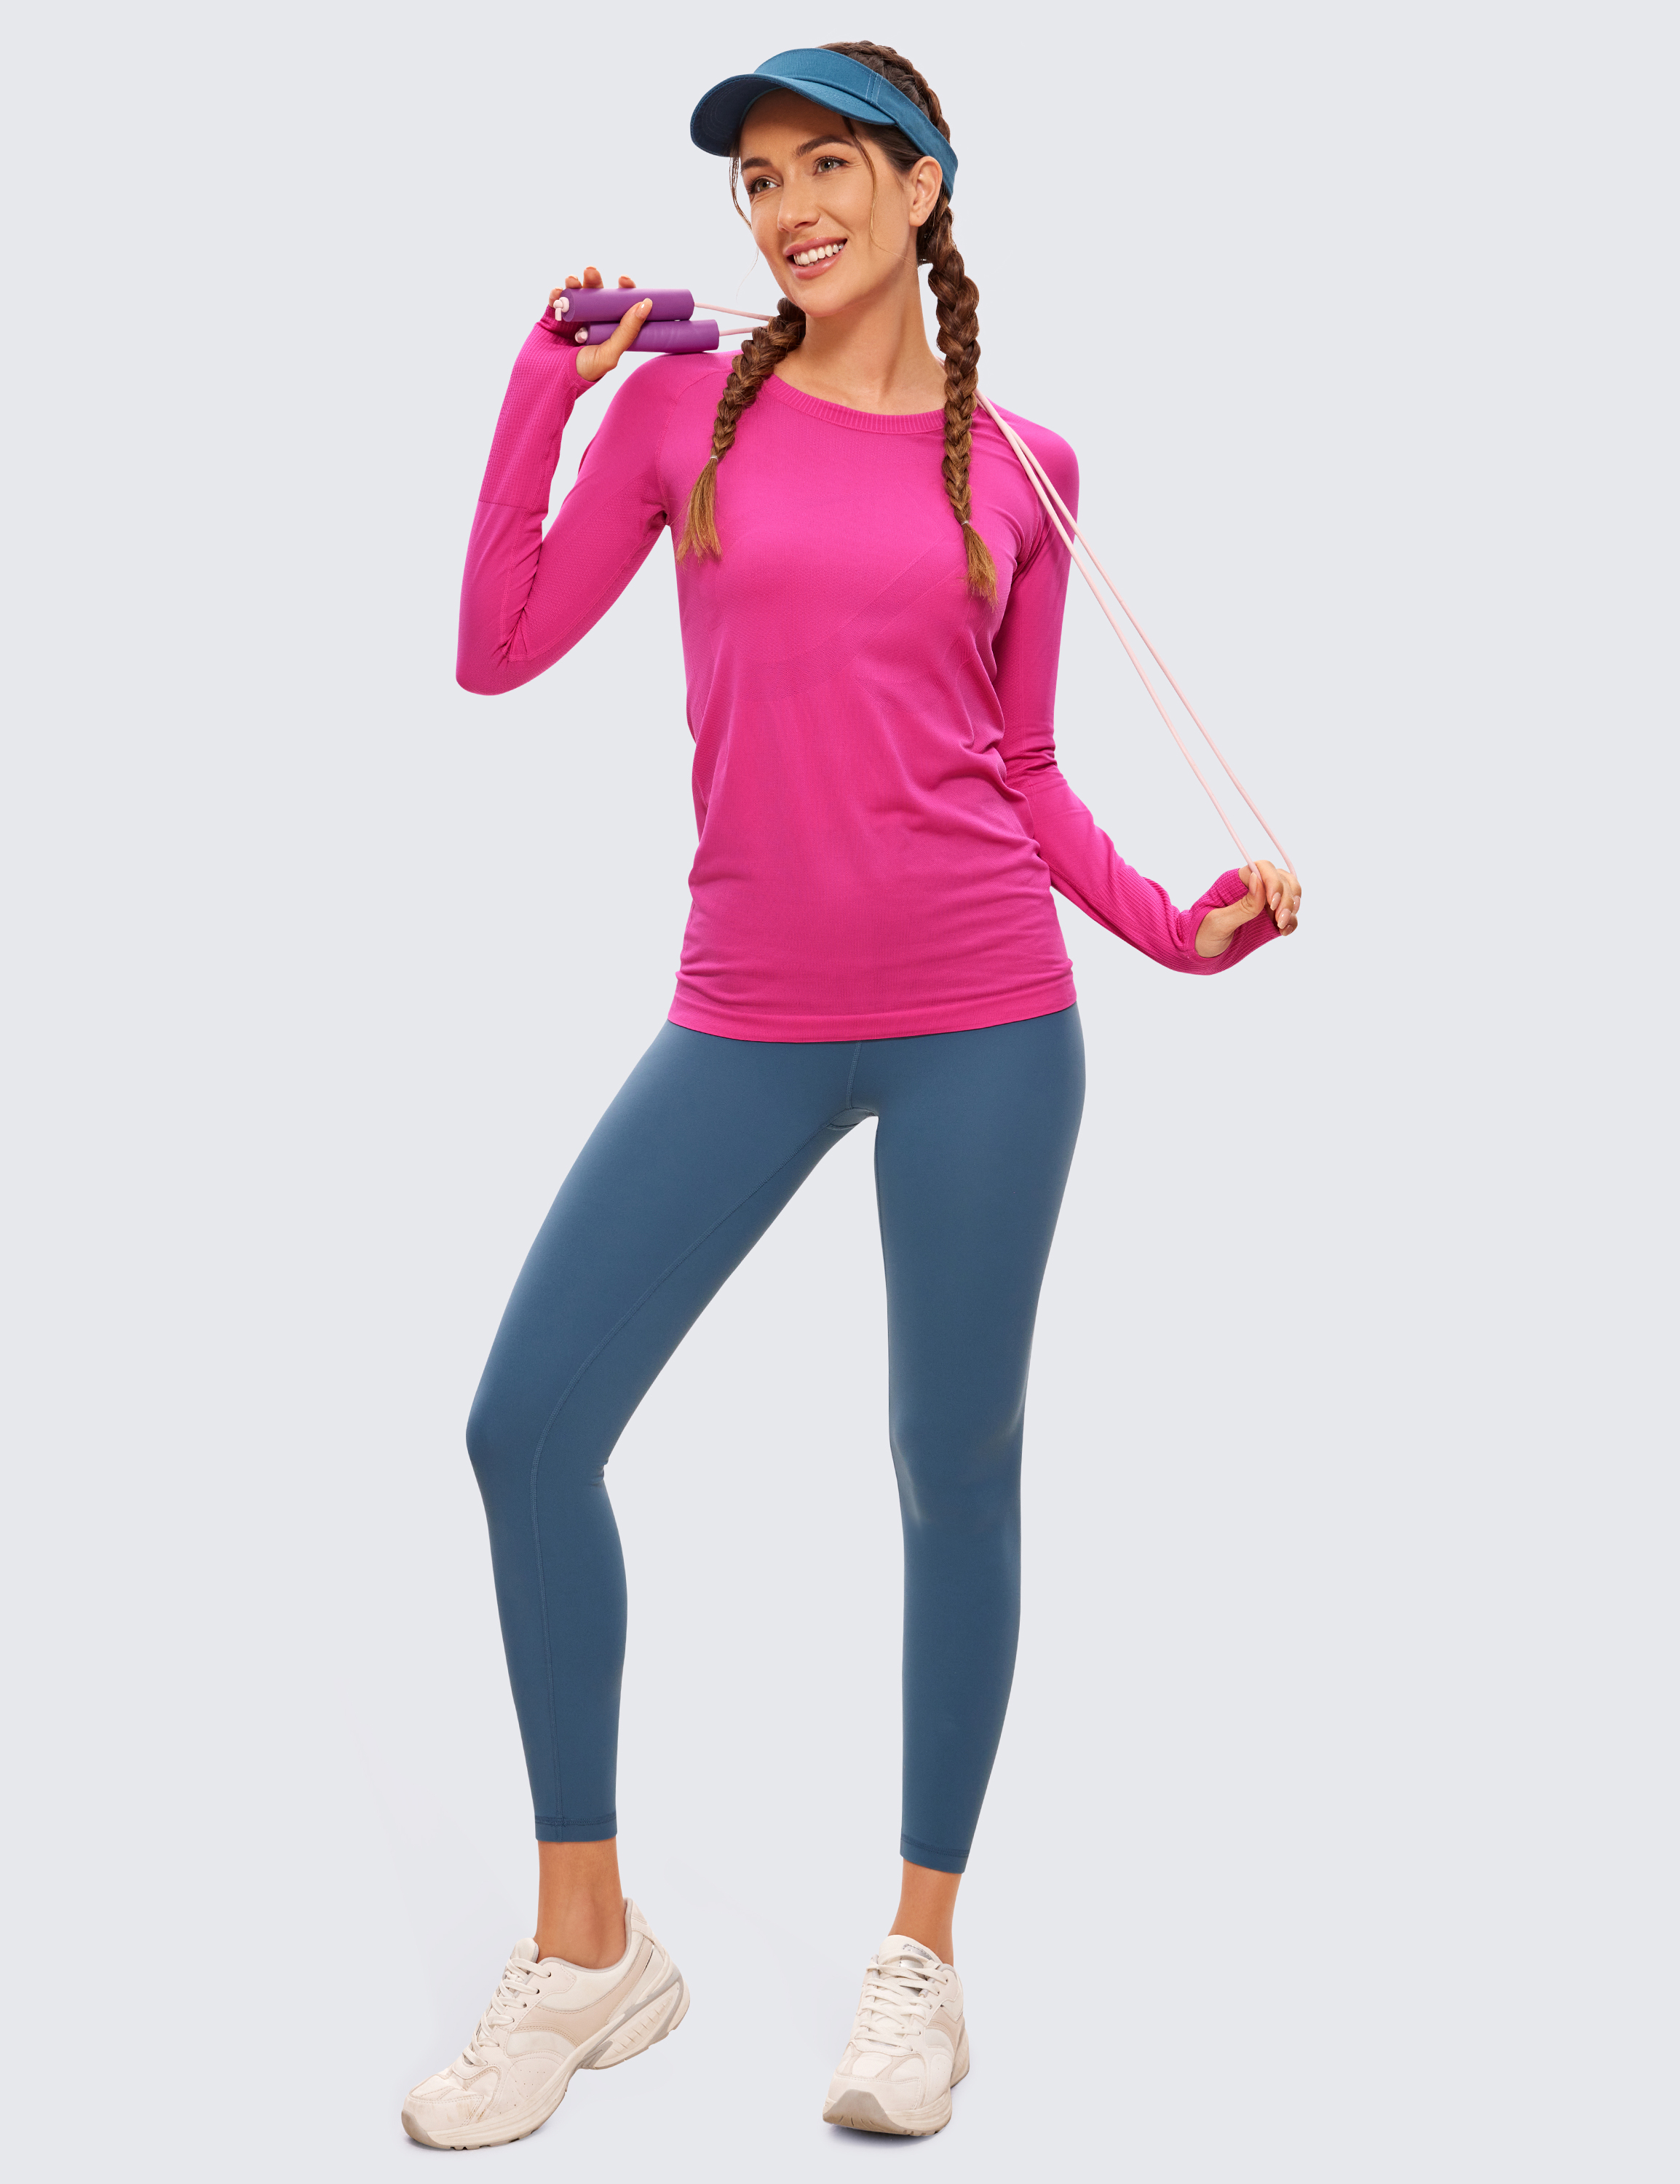 CRZ YOGA Speedy Seamless Women's Slim Fit Long Sleeves Sports Shirt Workout  Tops